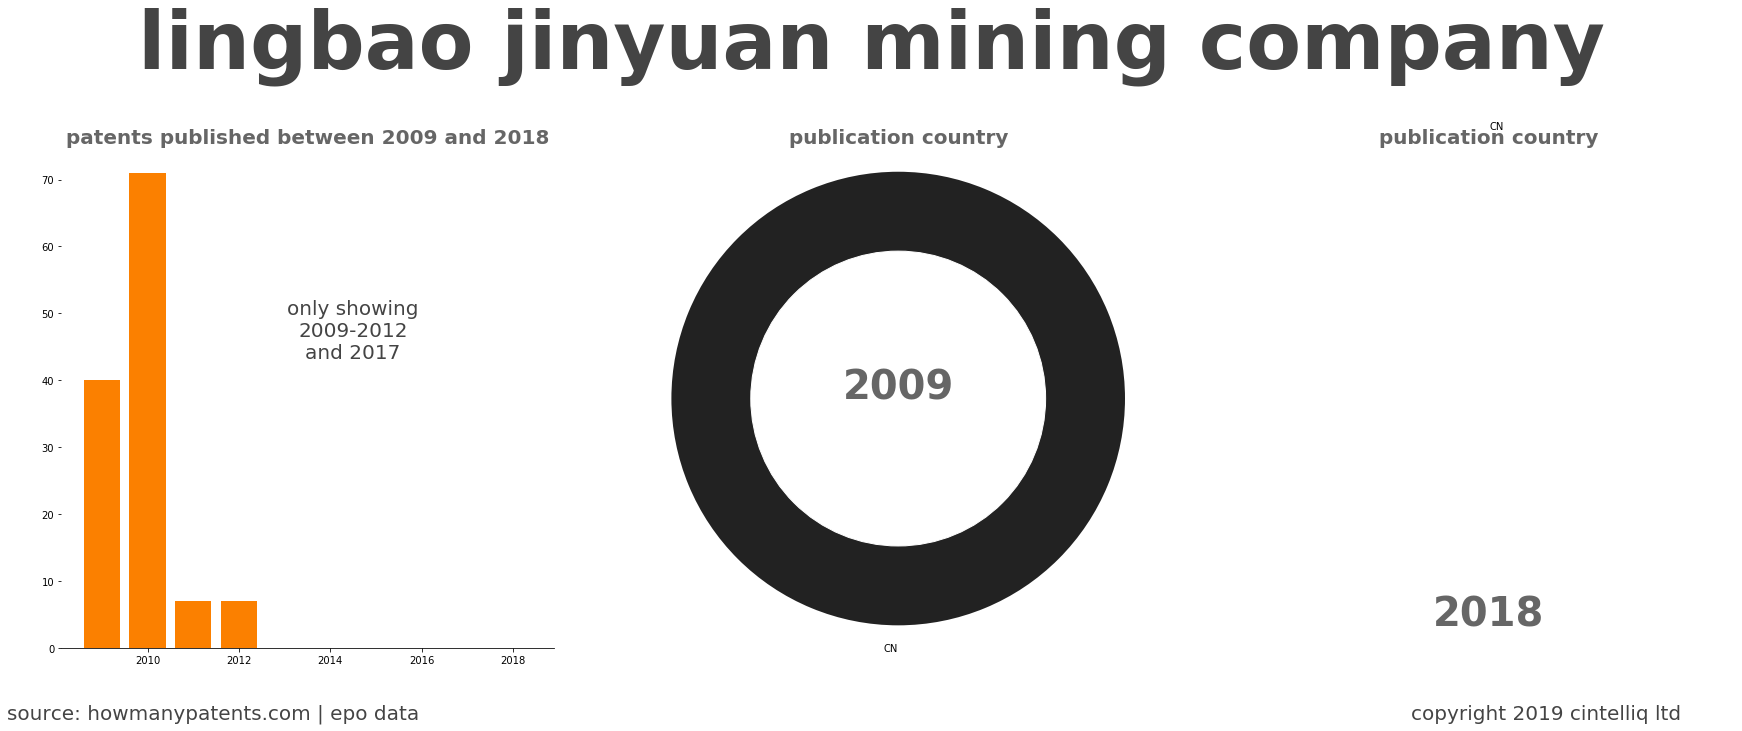 summary of patents for Lingbao Jinyuan Mining Company